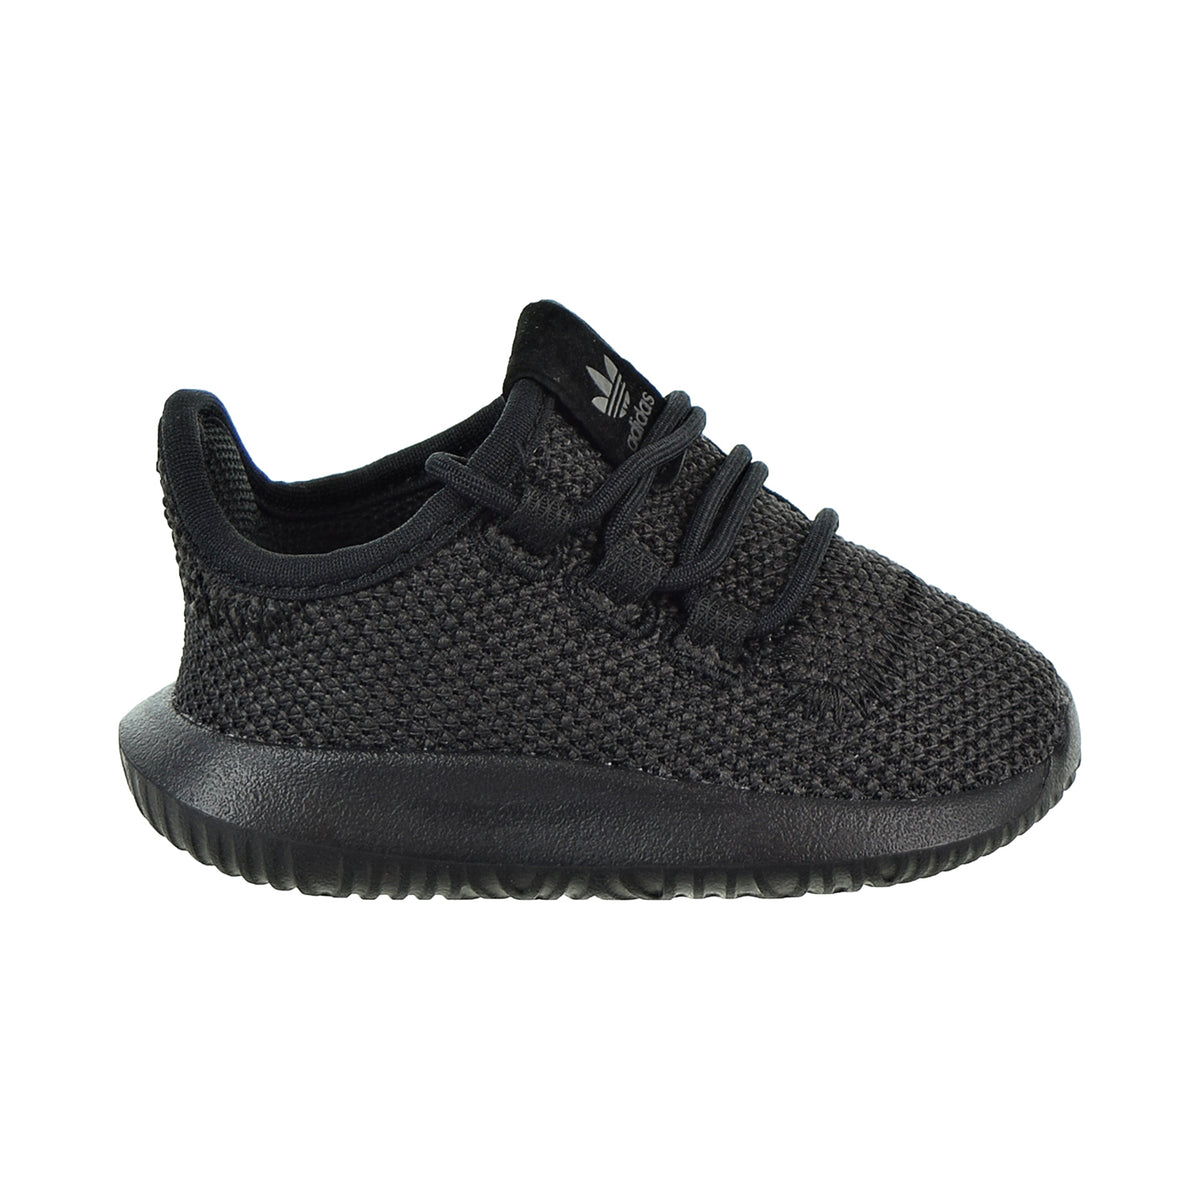 Adidas Tubular Shadow Shoes Black/Utility Black